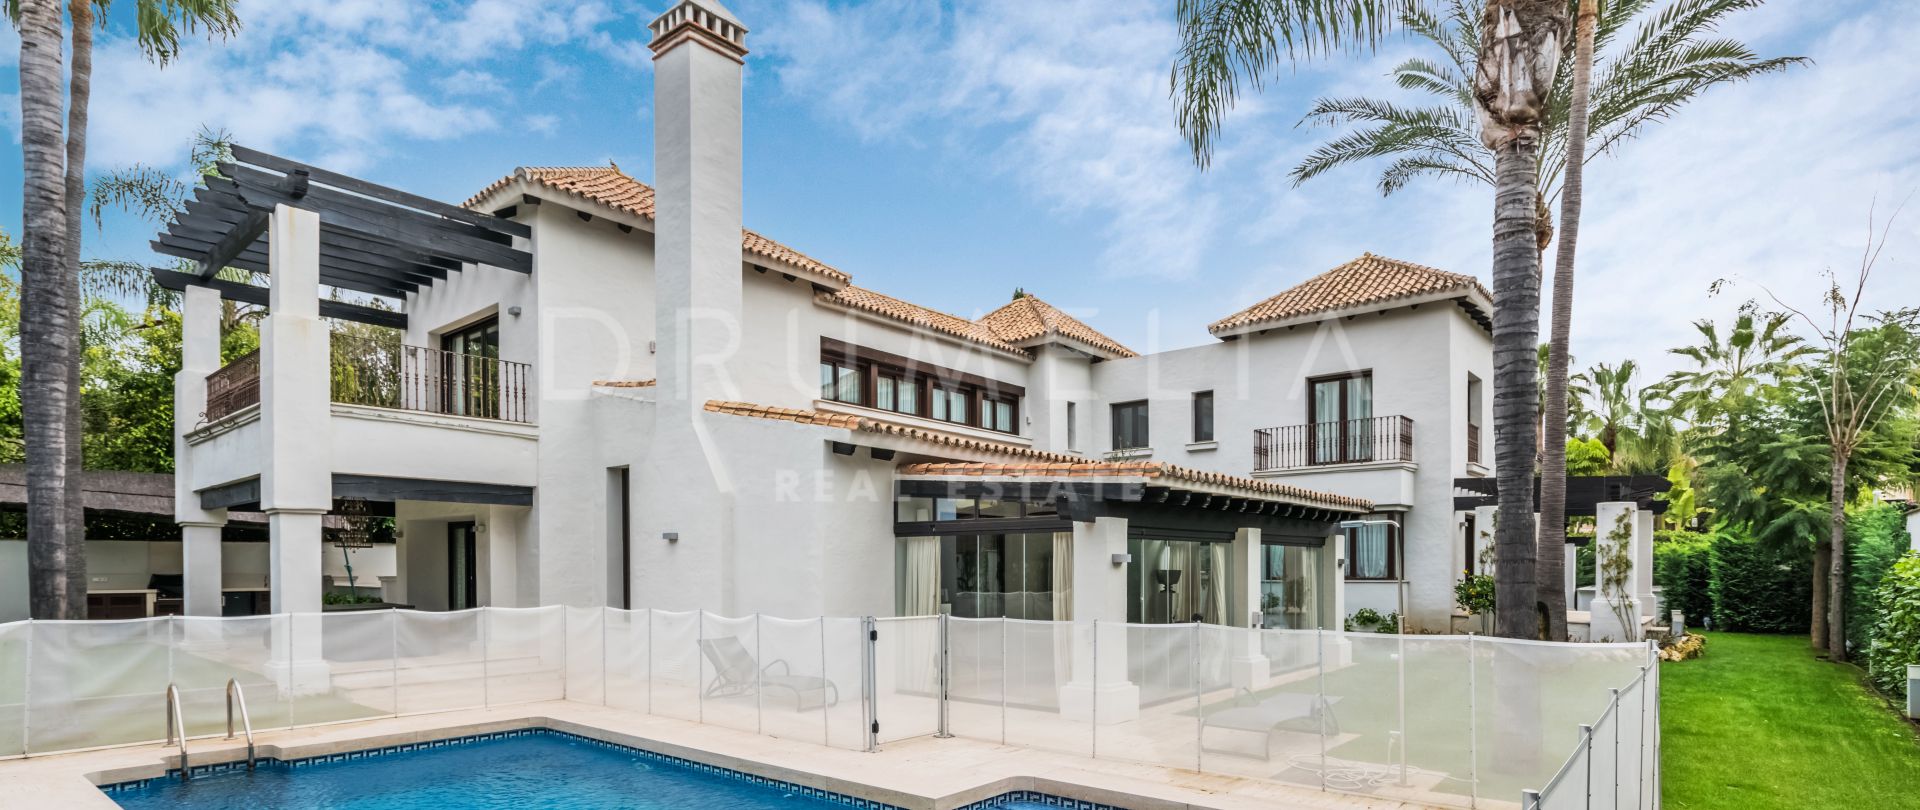 Magnificent Modern Mediterranean Luxury House, Marbella - Puerto Banus, Marbella